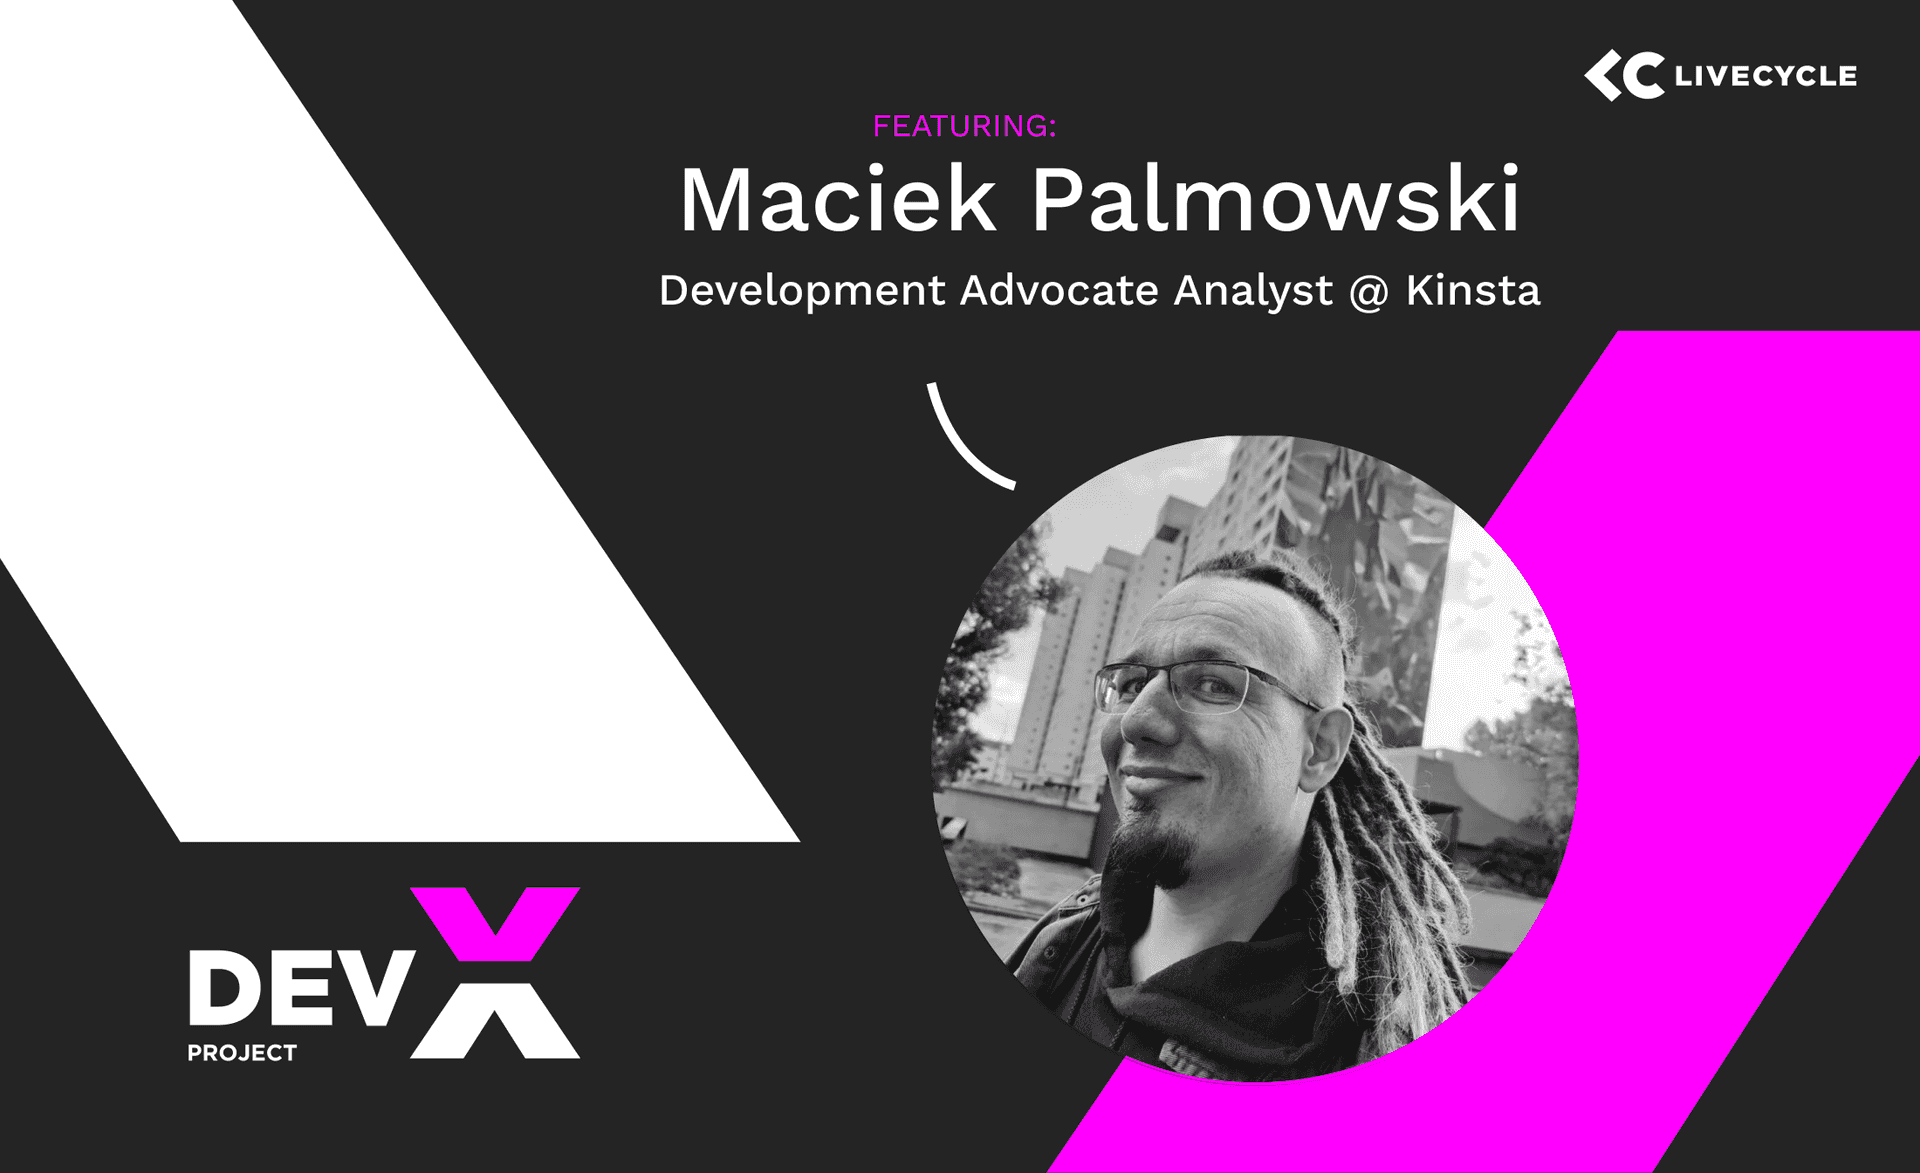 The Dev-X Project: Featuring Maciek Palmowski